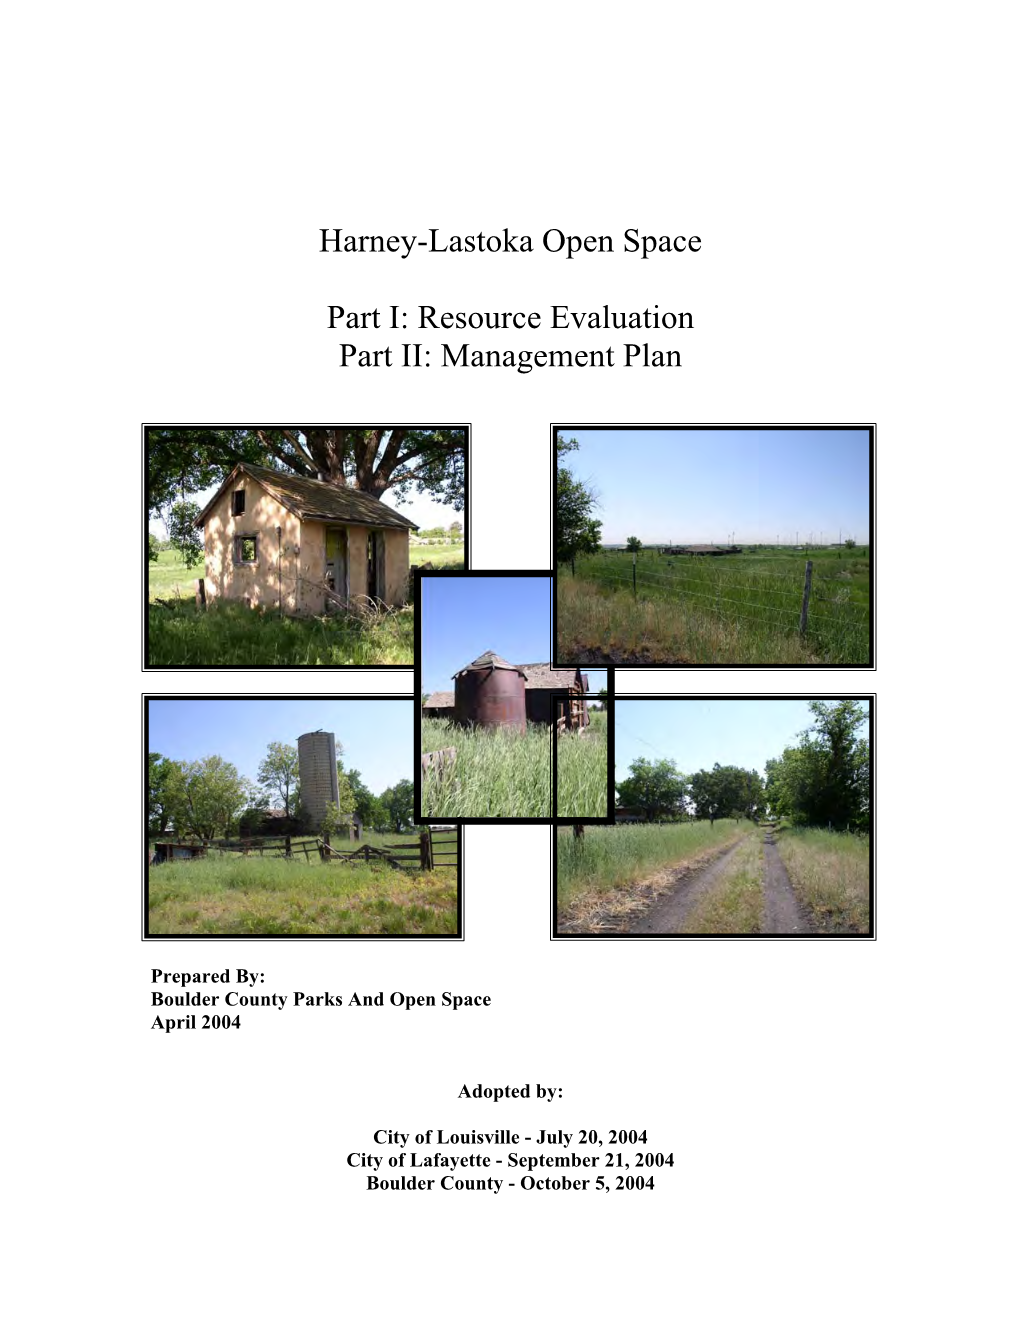 Harney-Lastoka Open Space Management Plan